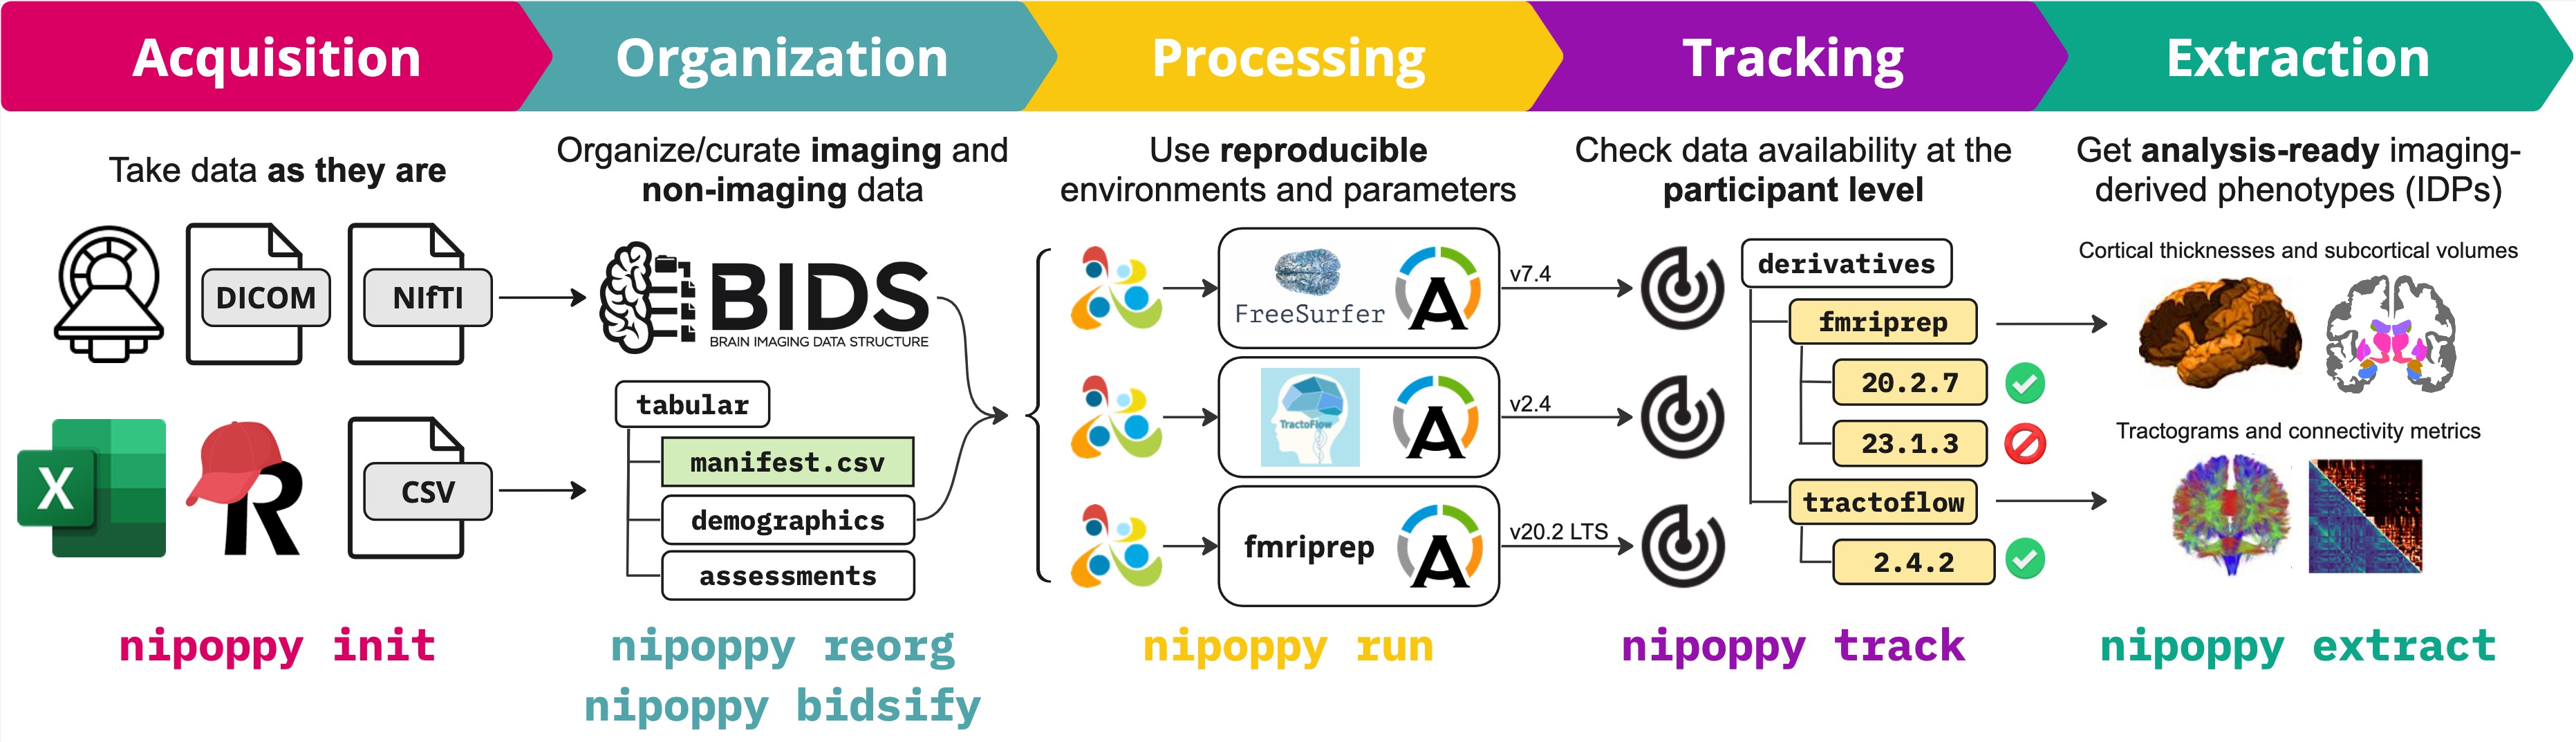 Nipoppy protocol